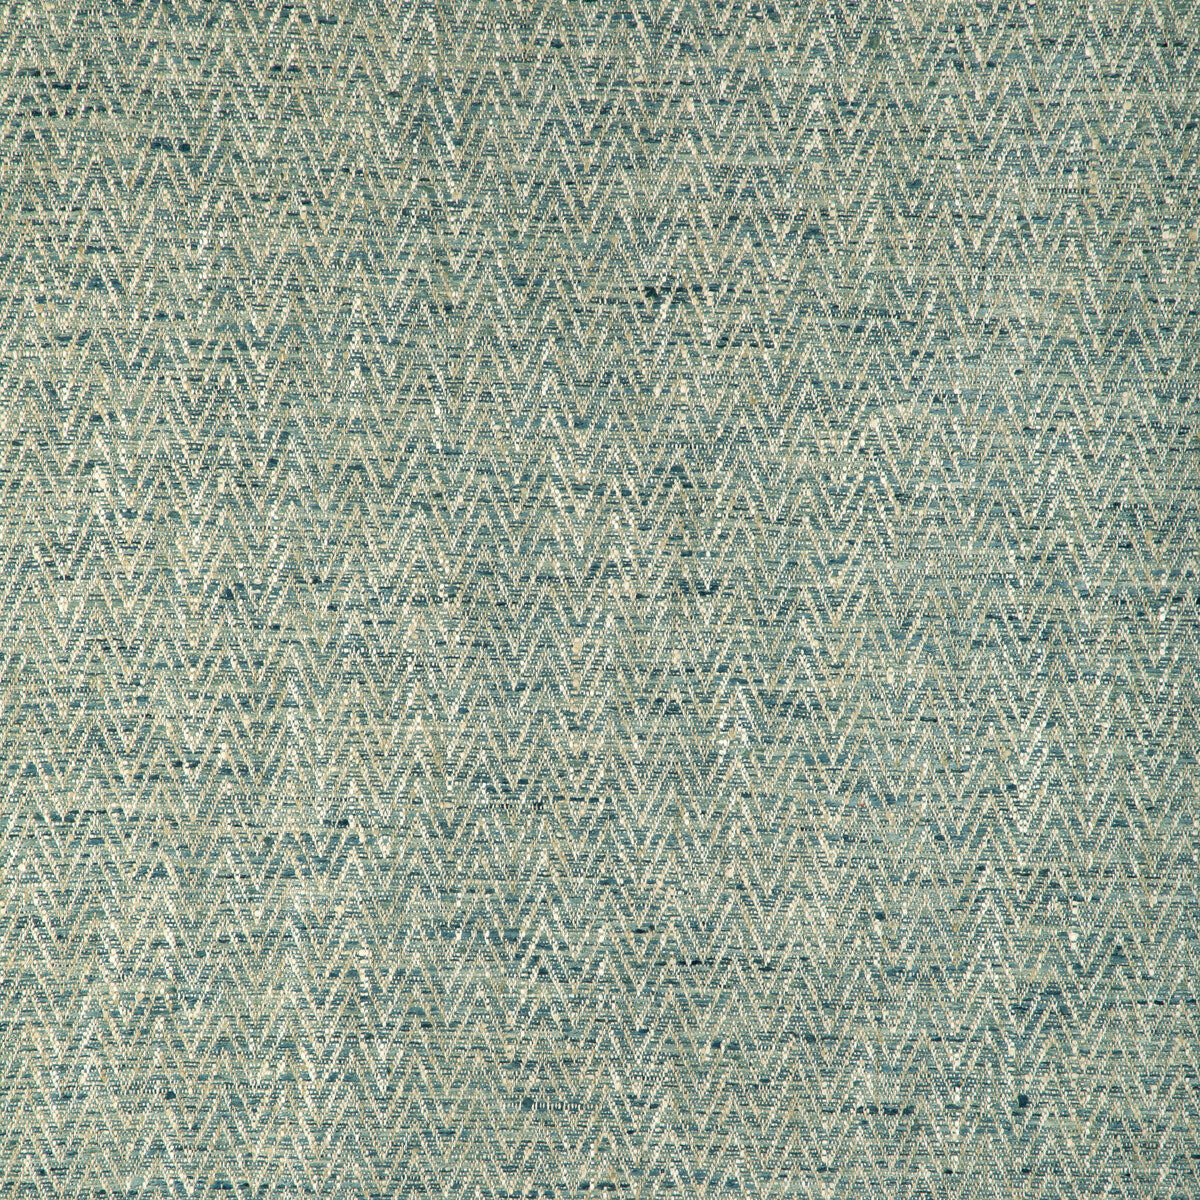 Kravet Smart fabric in 34092-313 color - pattern 34092.313.0 - by Kravet Smart